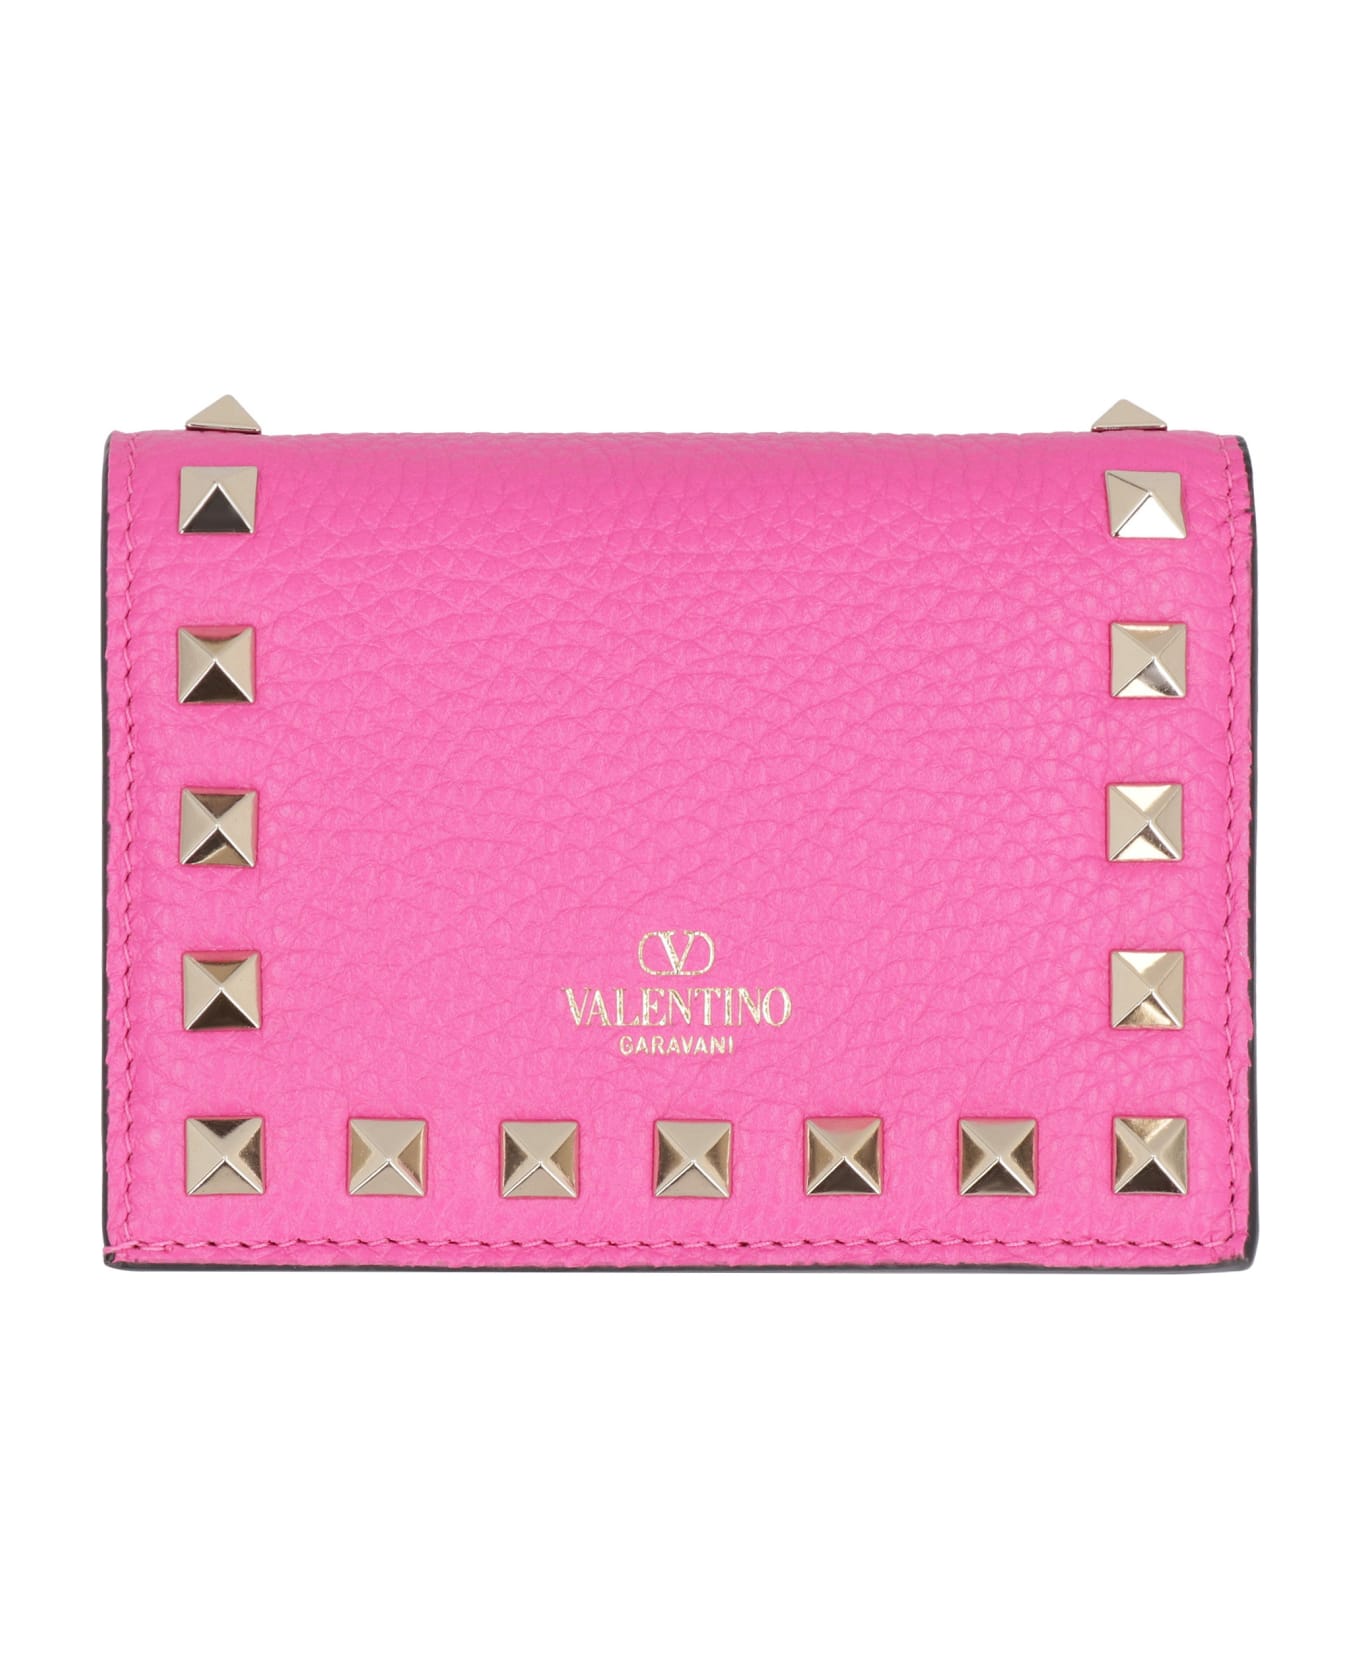 Valentino Garavani - Rockstud Small Leather Flap-over Wallet - Fuchsia 財布